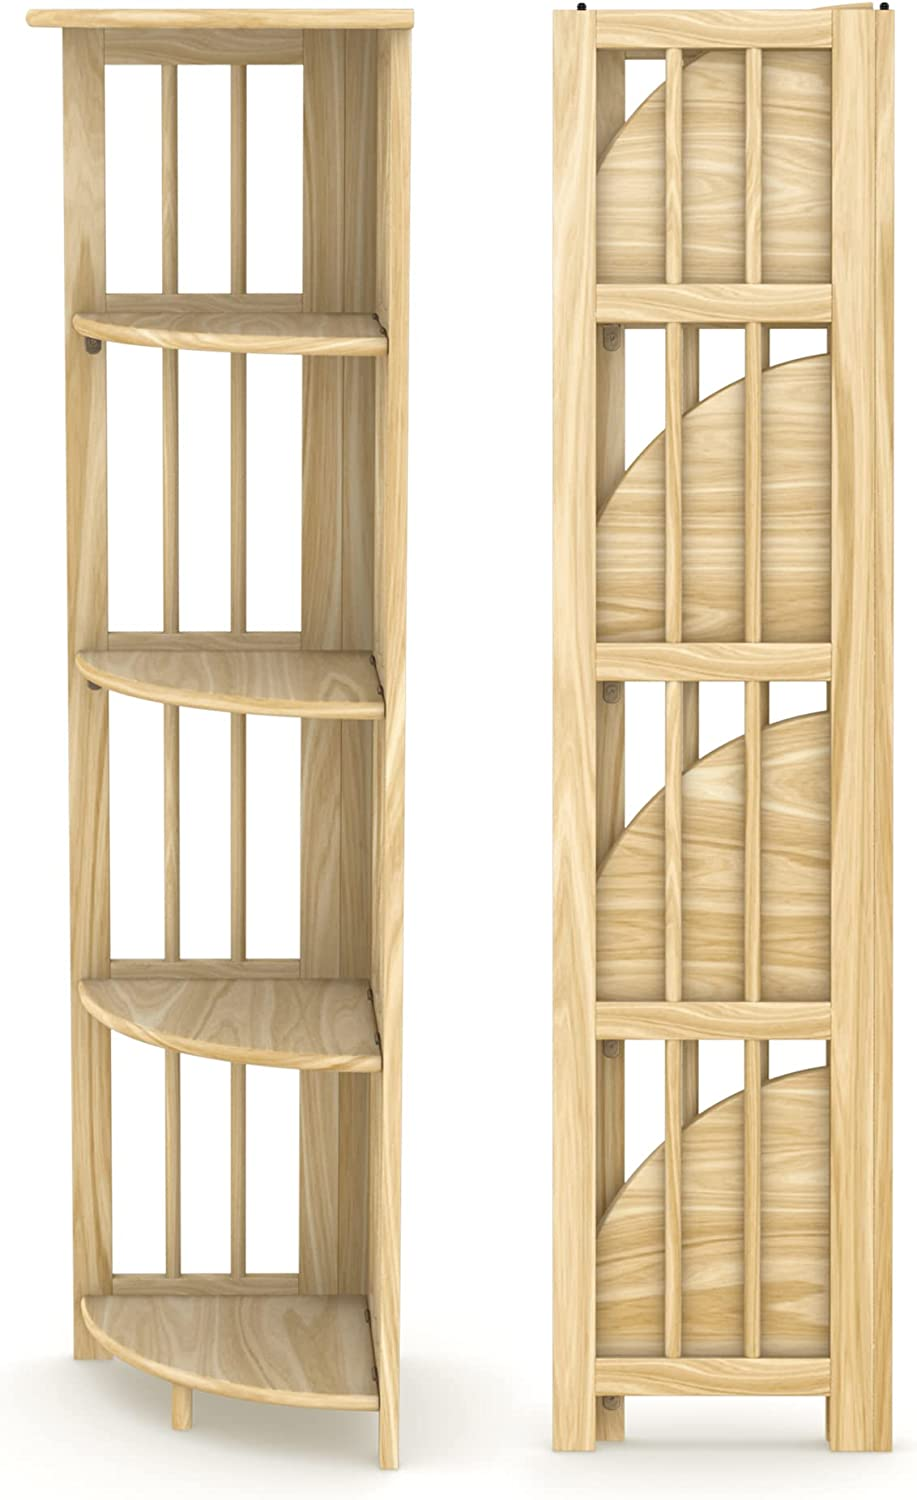 Stony Edge Folding Corner Shelf Easy Assembly - 51”x12.5”x12.5” 5 Tiers - Perfect Wooden Corner Bookshelf Organizer for Books and Decorative Items. (White)